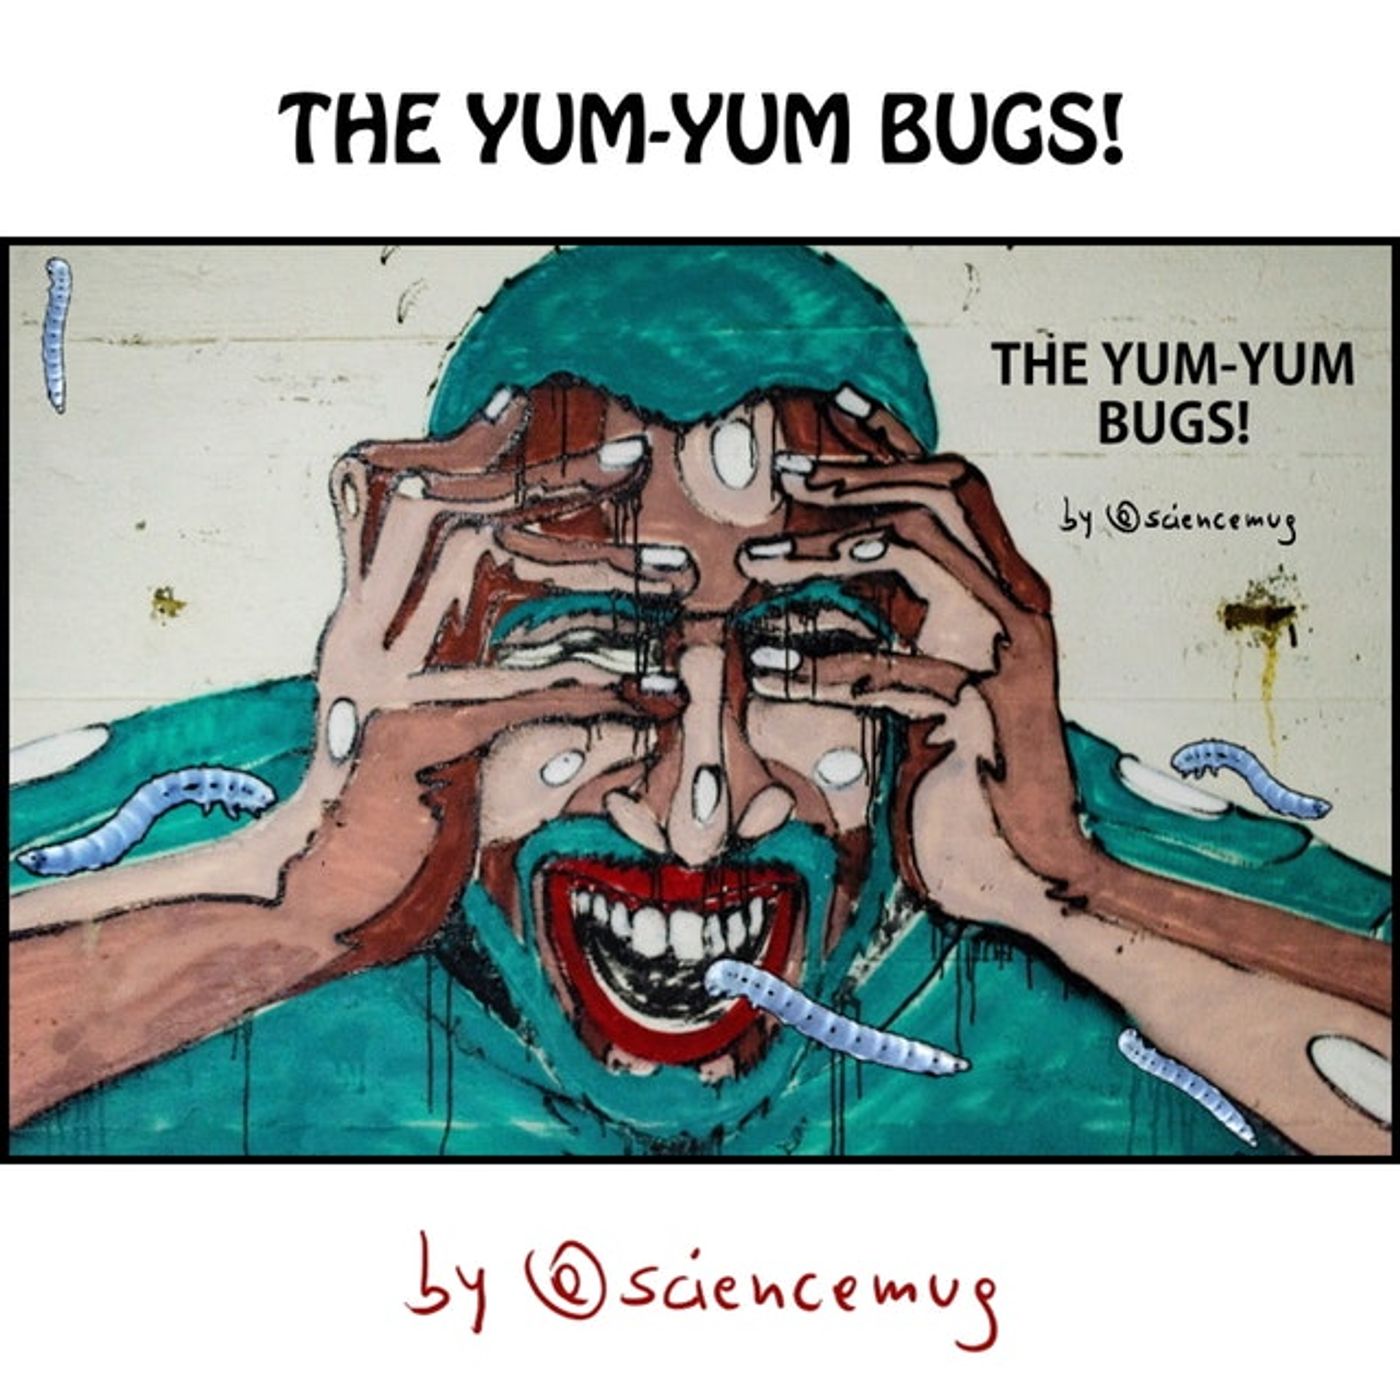 The yum-yum bugs